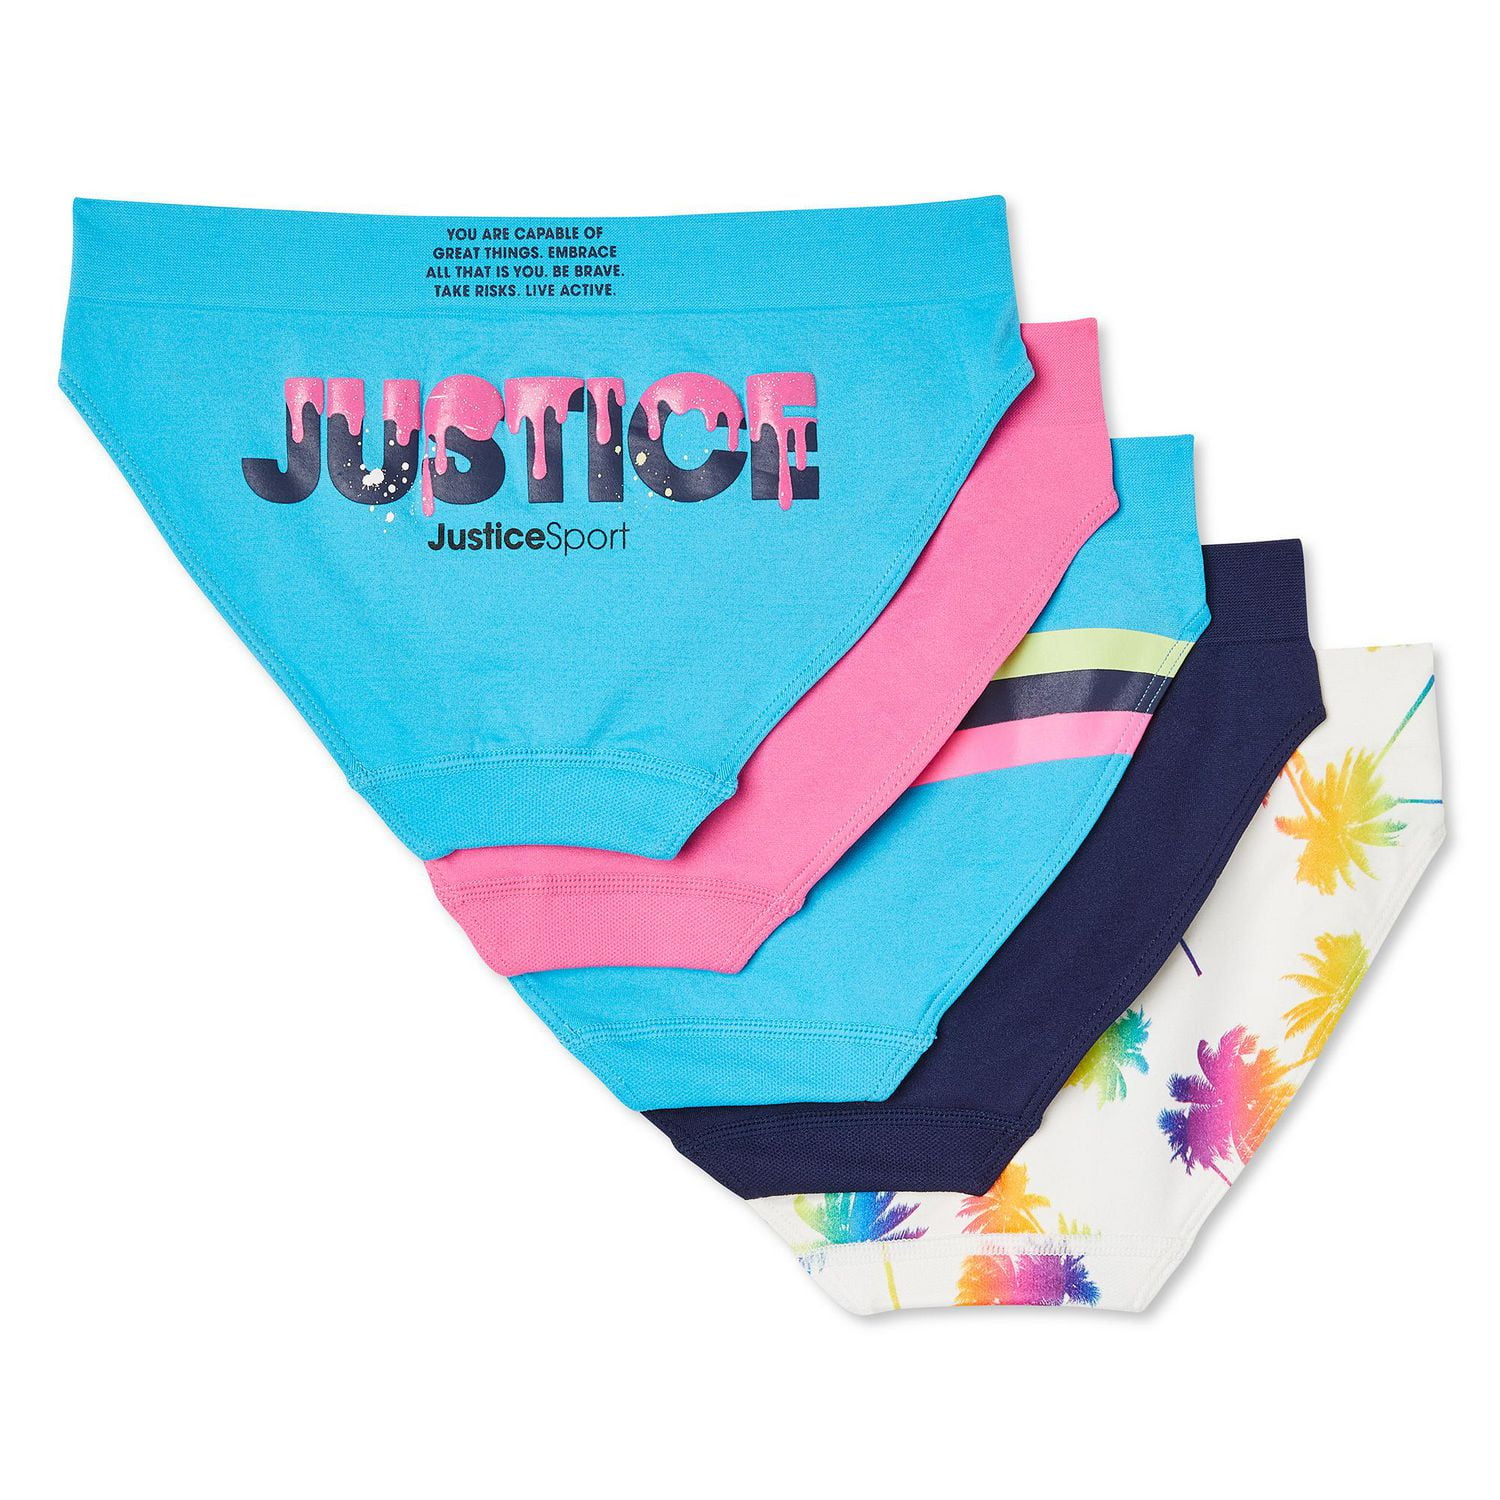 Justice Brand Underwear Never Worn for Sale in Bakersfield, CA